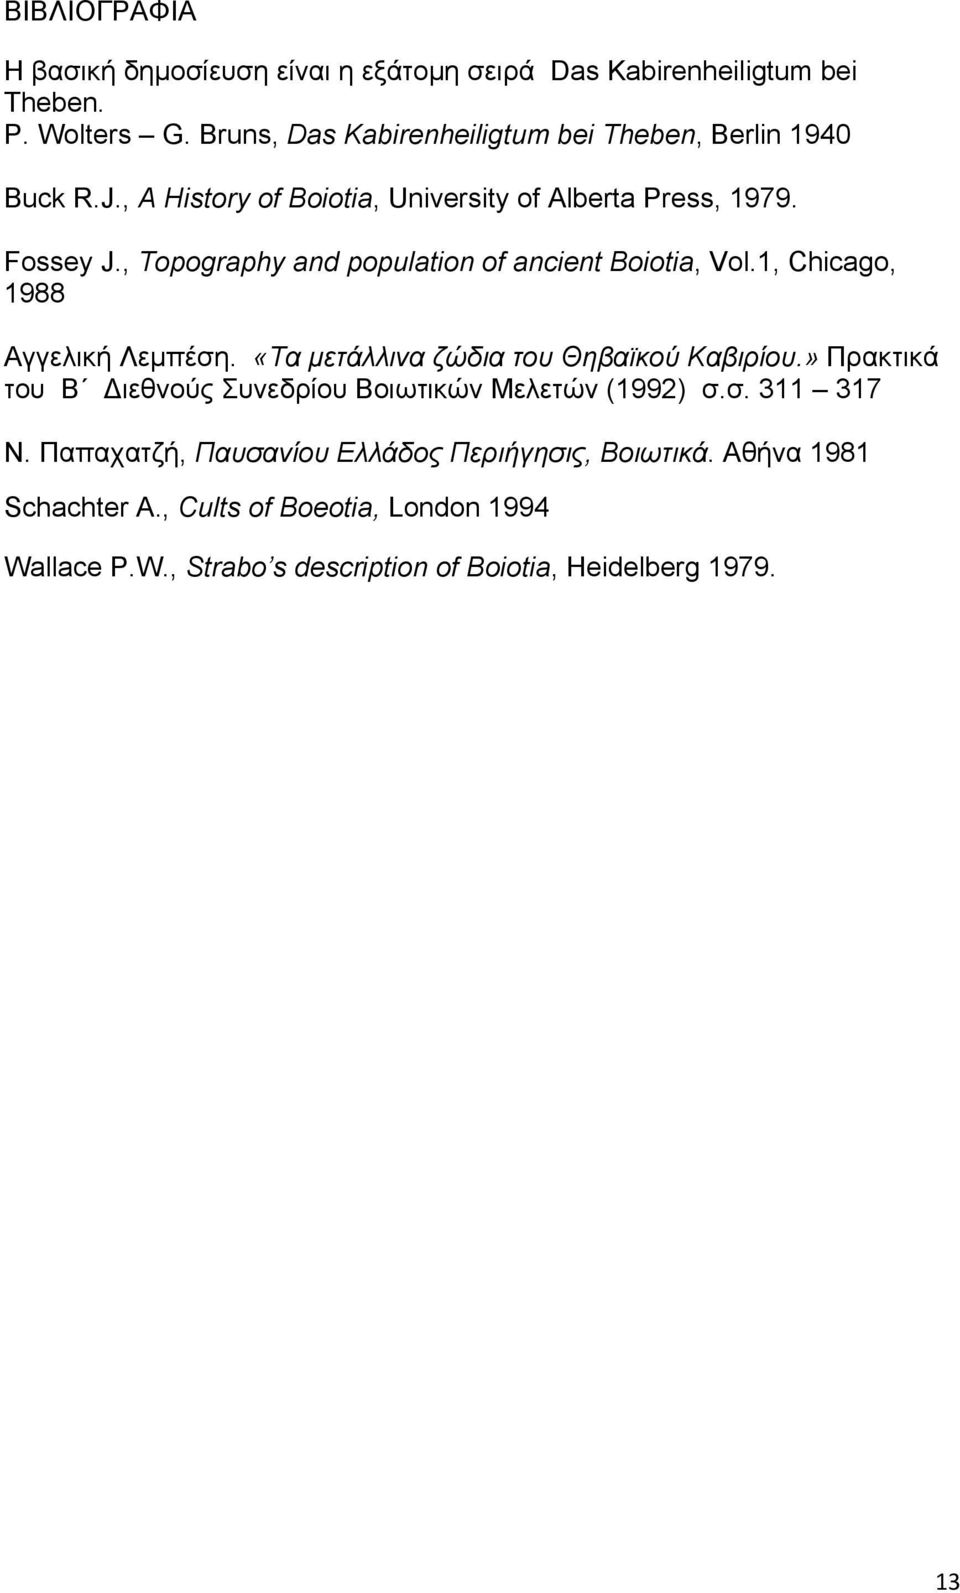 , Topography and population of ancient Boiotia, Vol.1, Chicago, 1988 Αγγελική Λεμπέση. «Τα μετάλλινα ζώδια του Θηβαϊκού Καβιρίου.